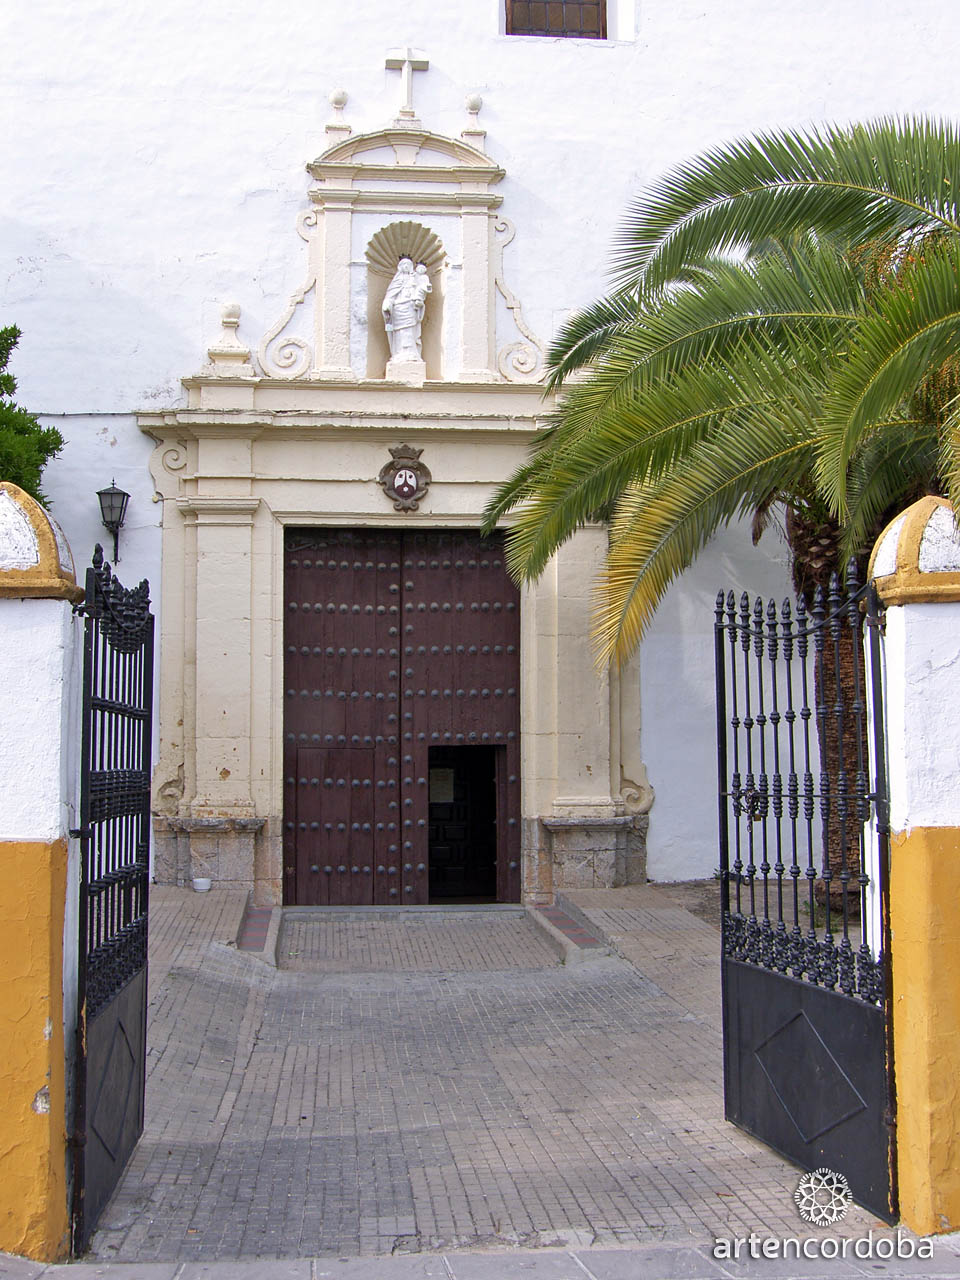 Cava esquema sugerir Puerta Nueva - Córdoba - Valdés Leal